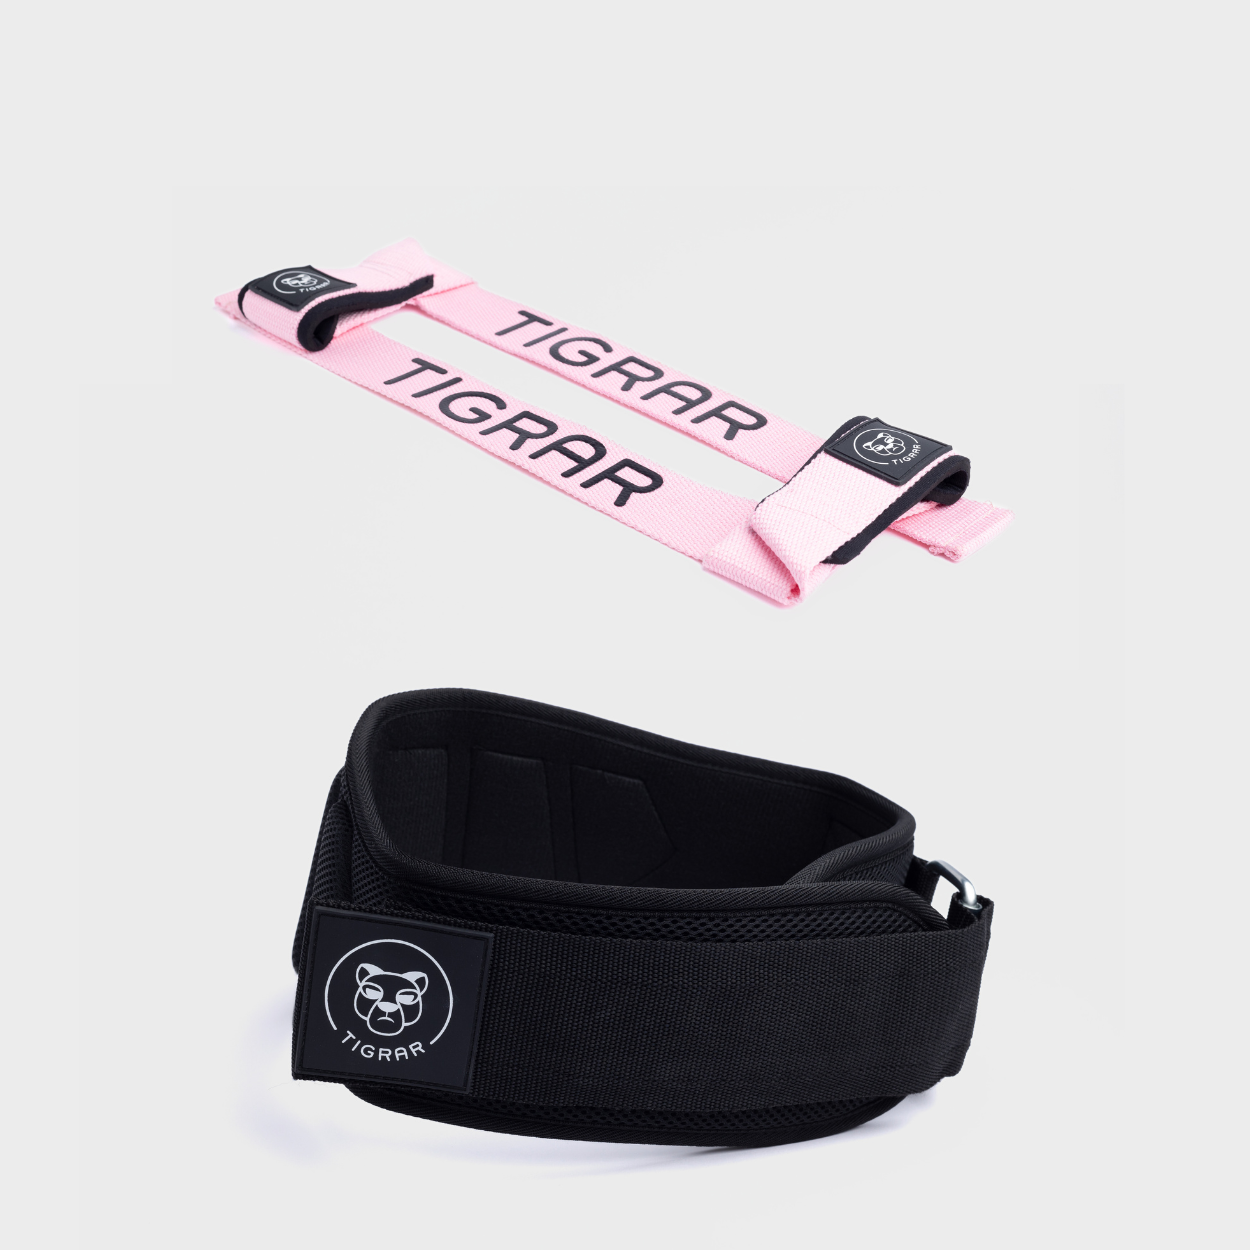 Weight training belt met padded lifting straps roze